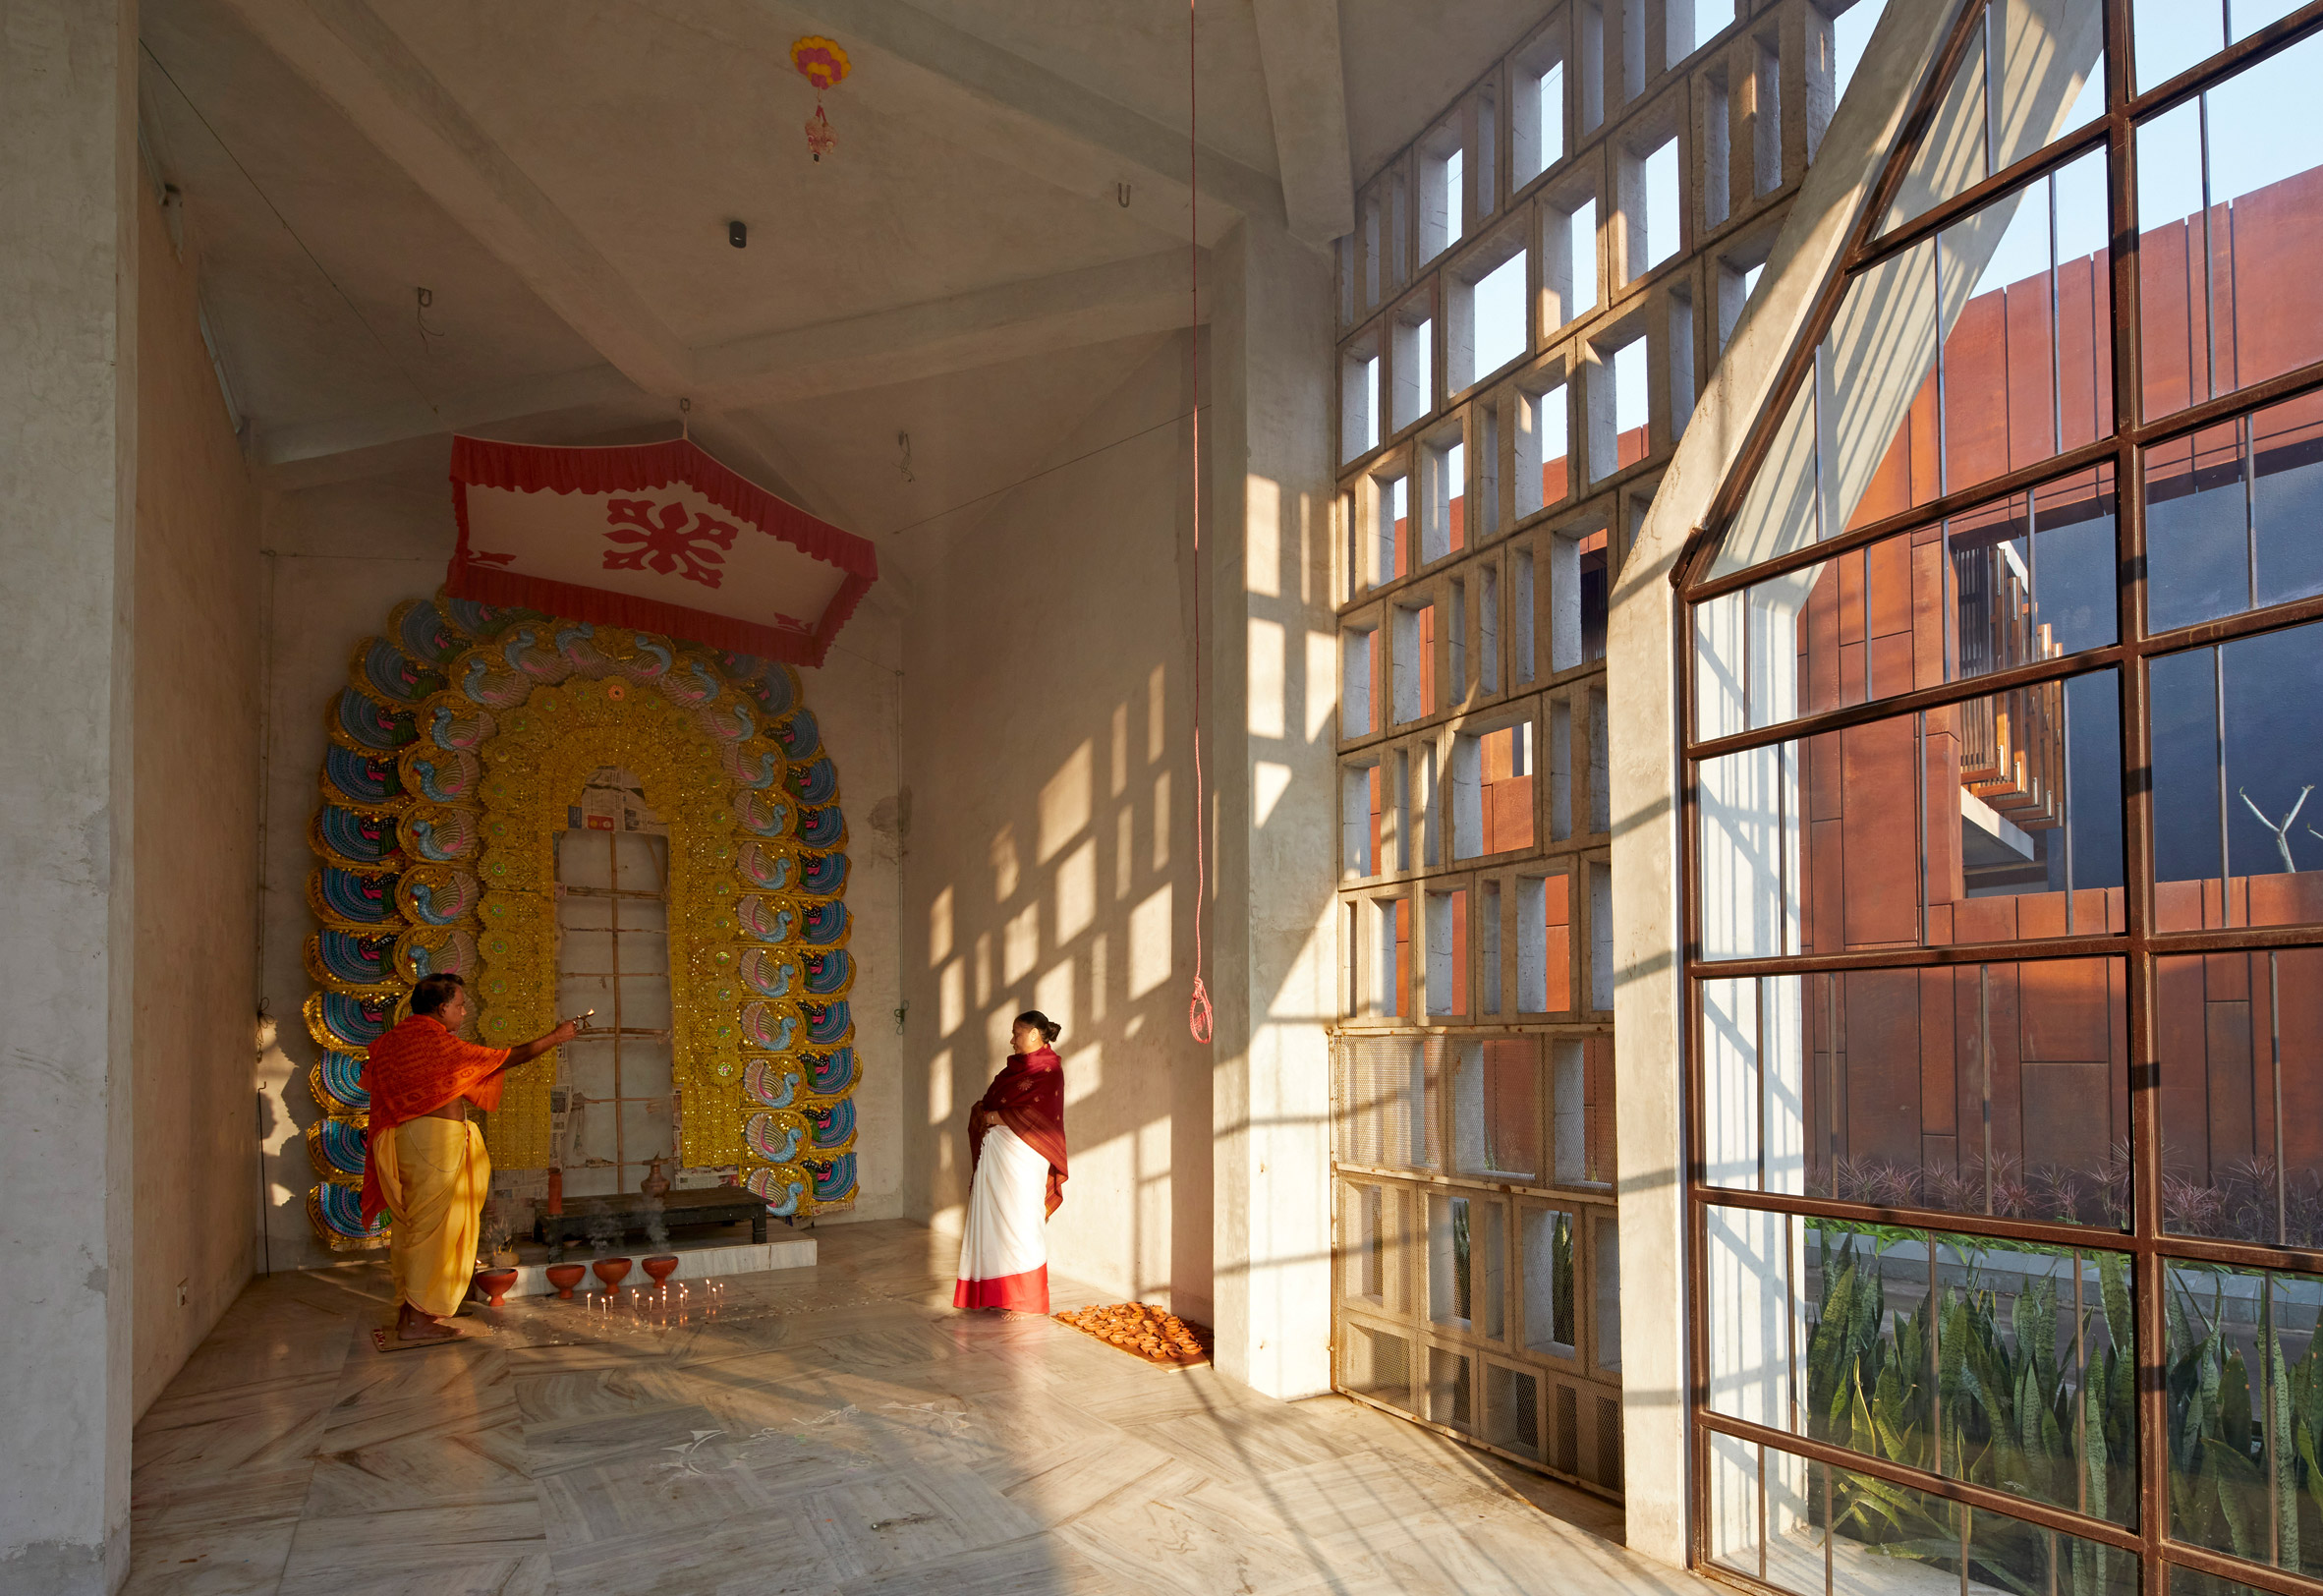 Templo hindu de concreto treliçado e vidro é criado na Índia